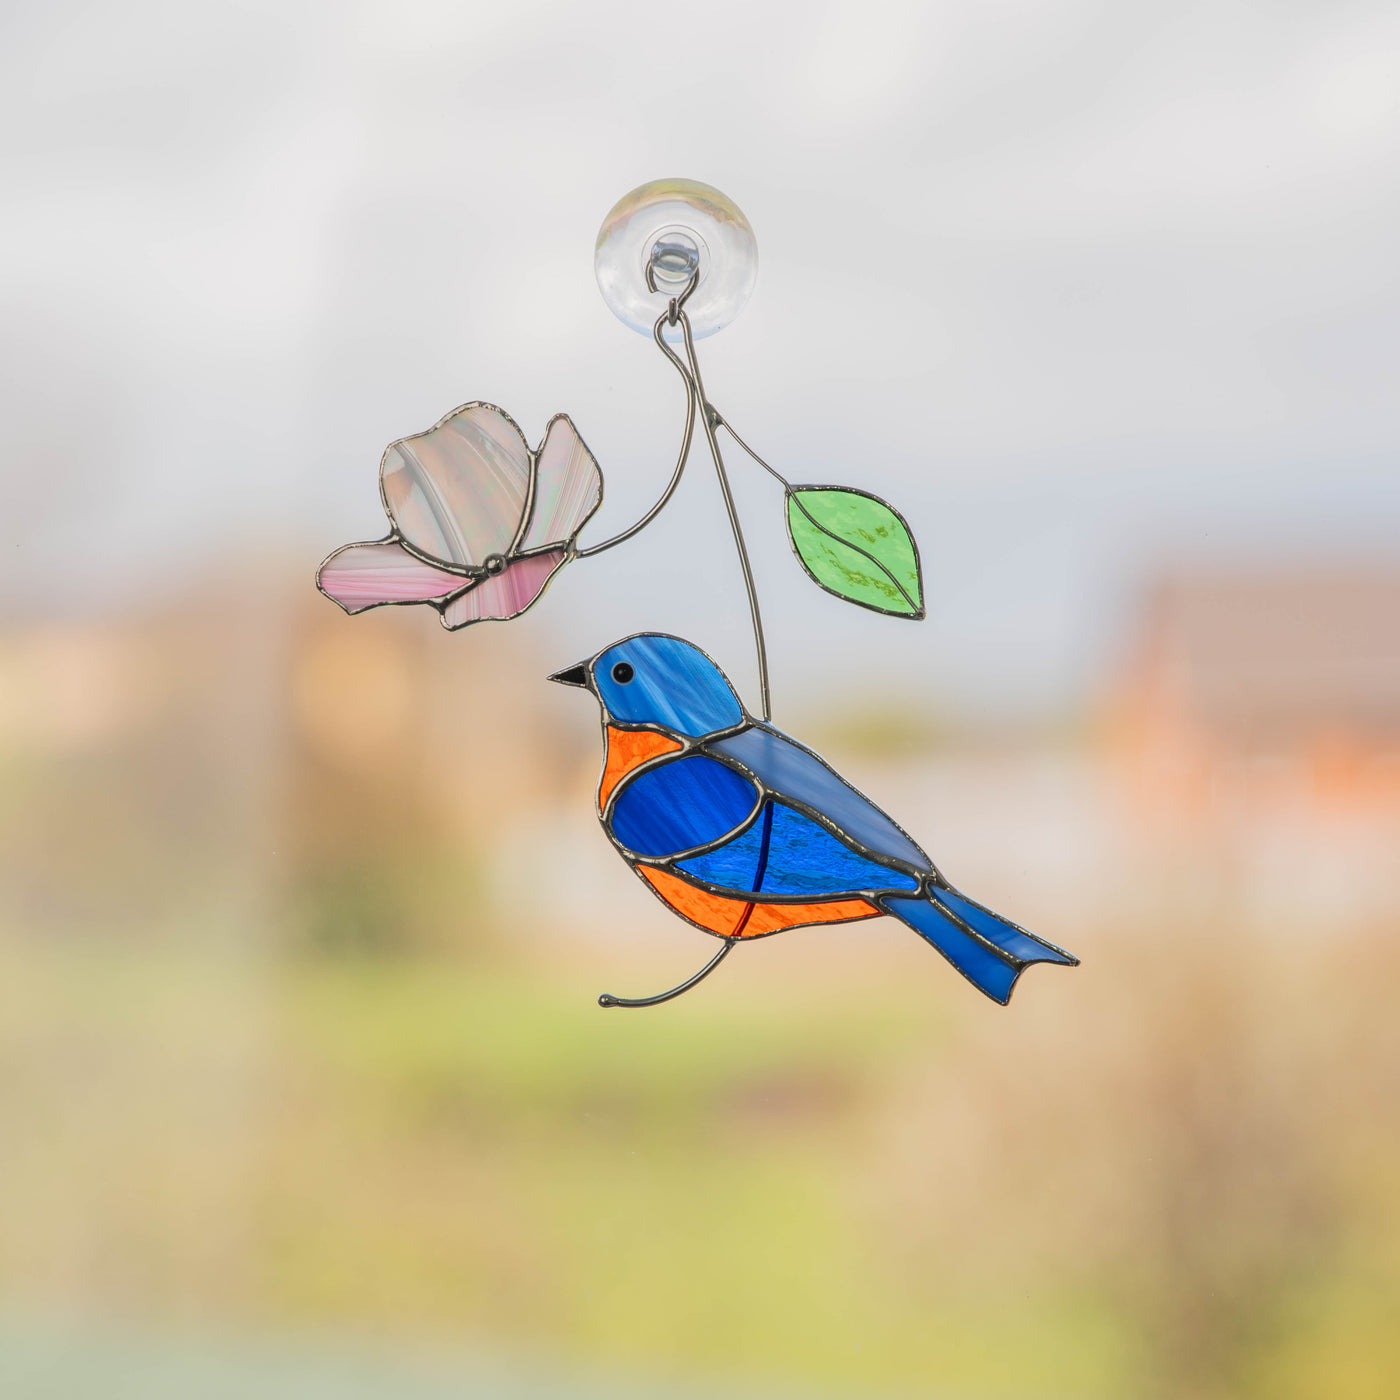 Stained glass bluebird suncatcher